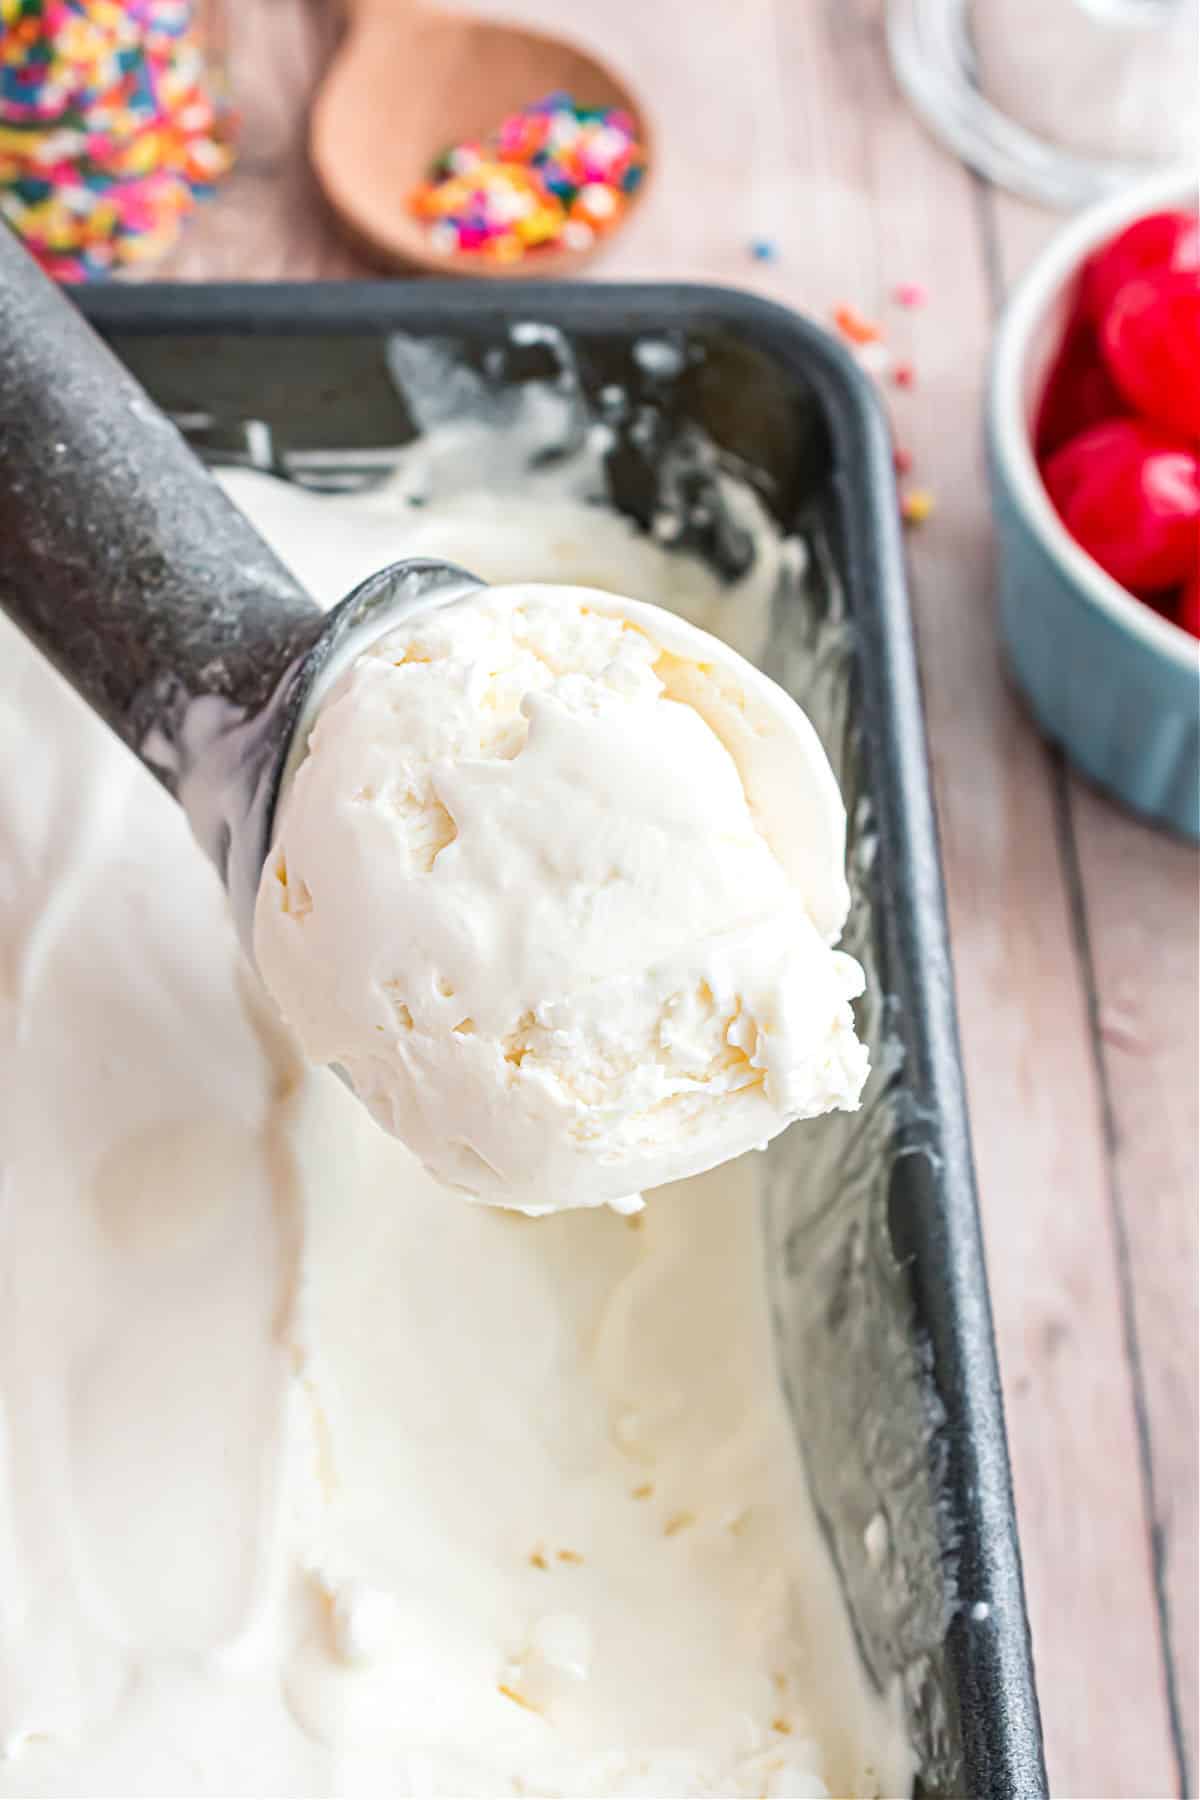 Scoop of vanilla ice cream in metal loaf pan.